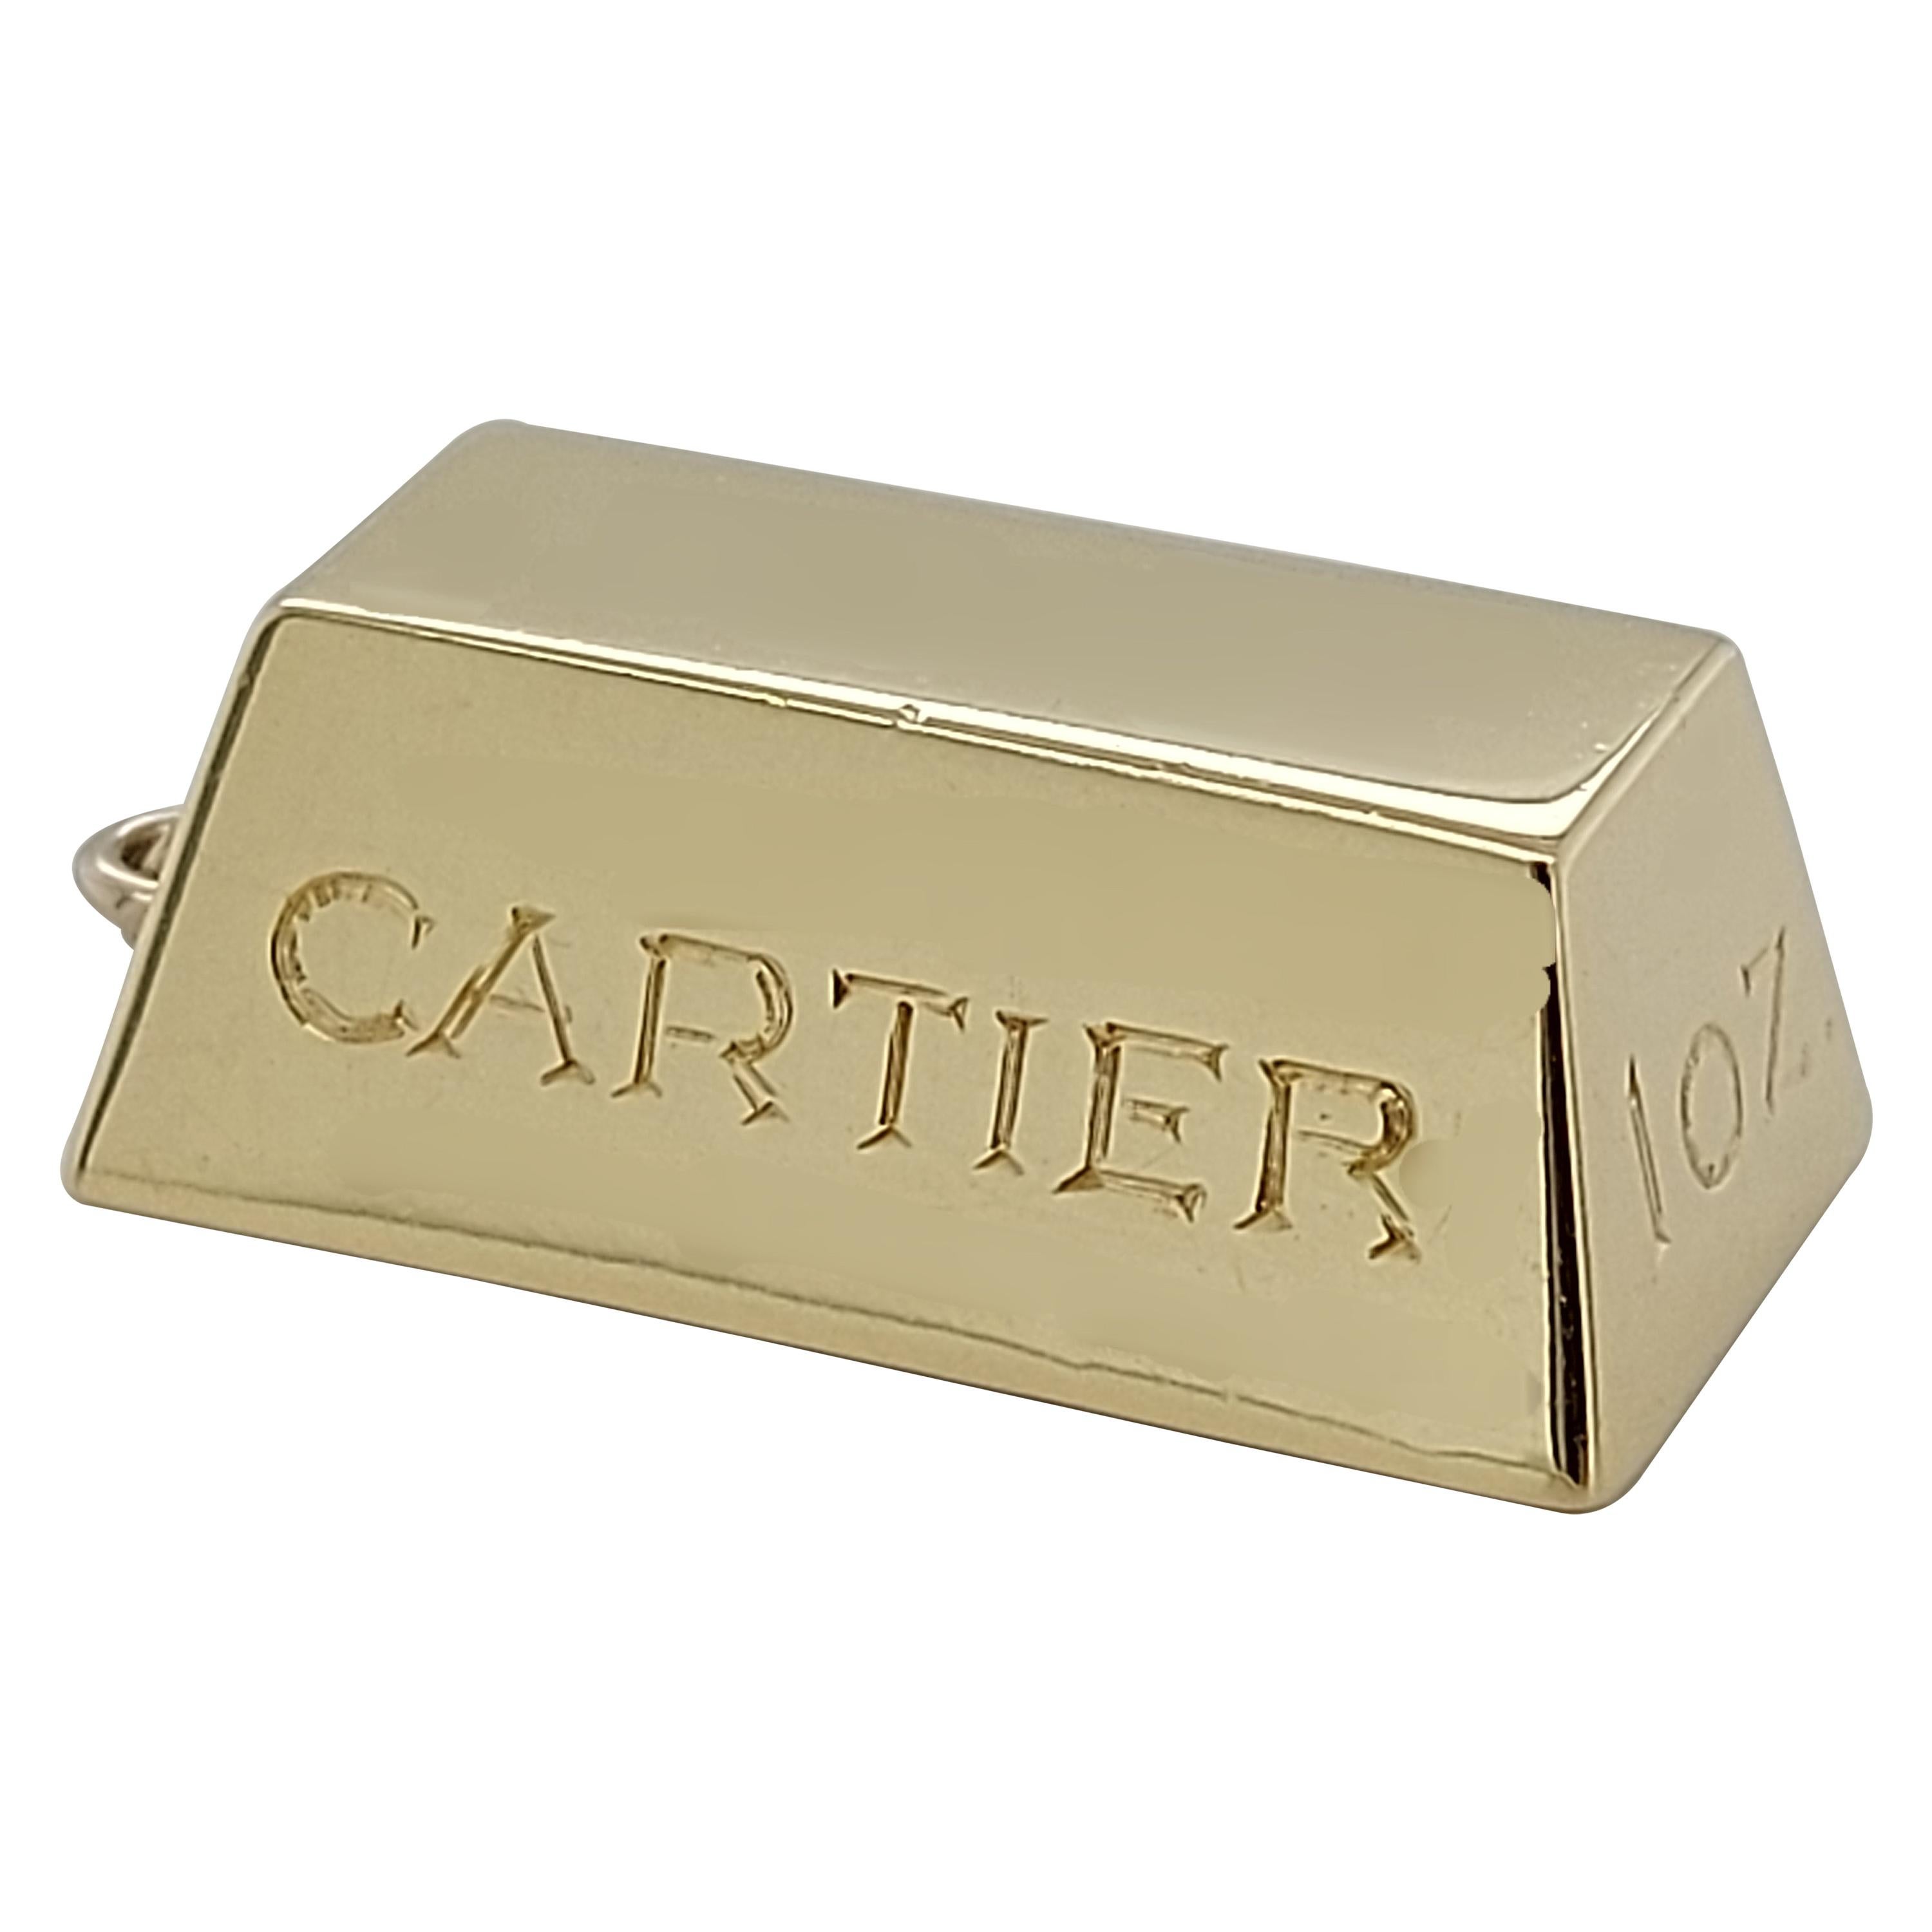 Cartier 1 oz Ingot Brick Bar Solid 18 Karat Gold Charm or Pendant from 1970s